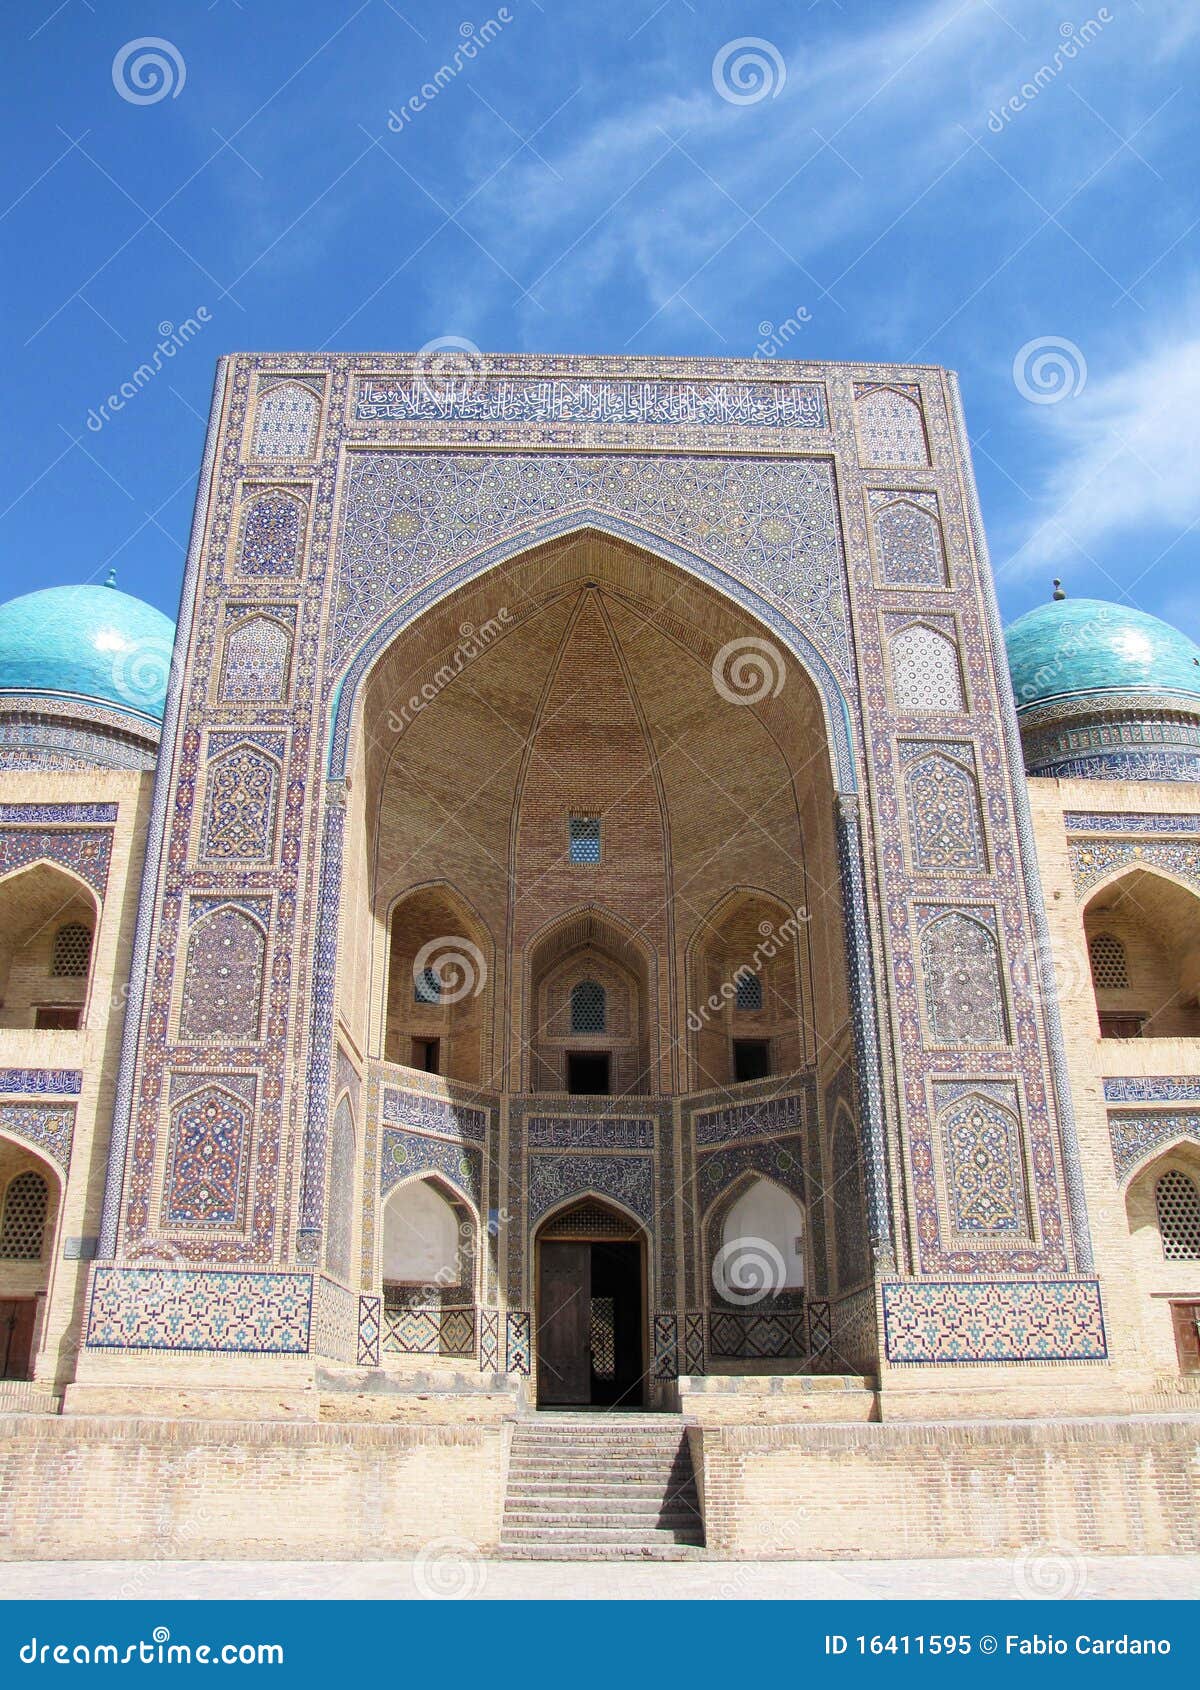 Oriental facade stock image. Image of uzbekistan, minaret - 16411595